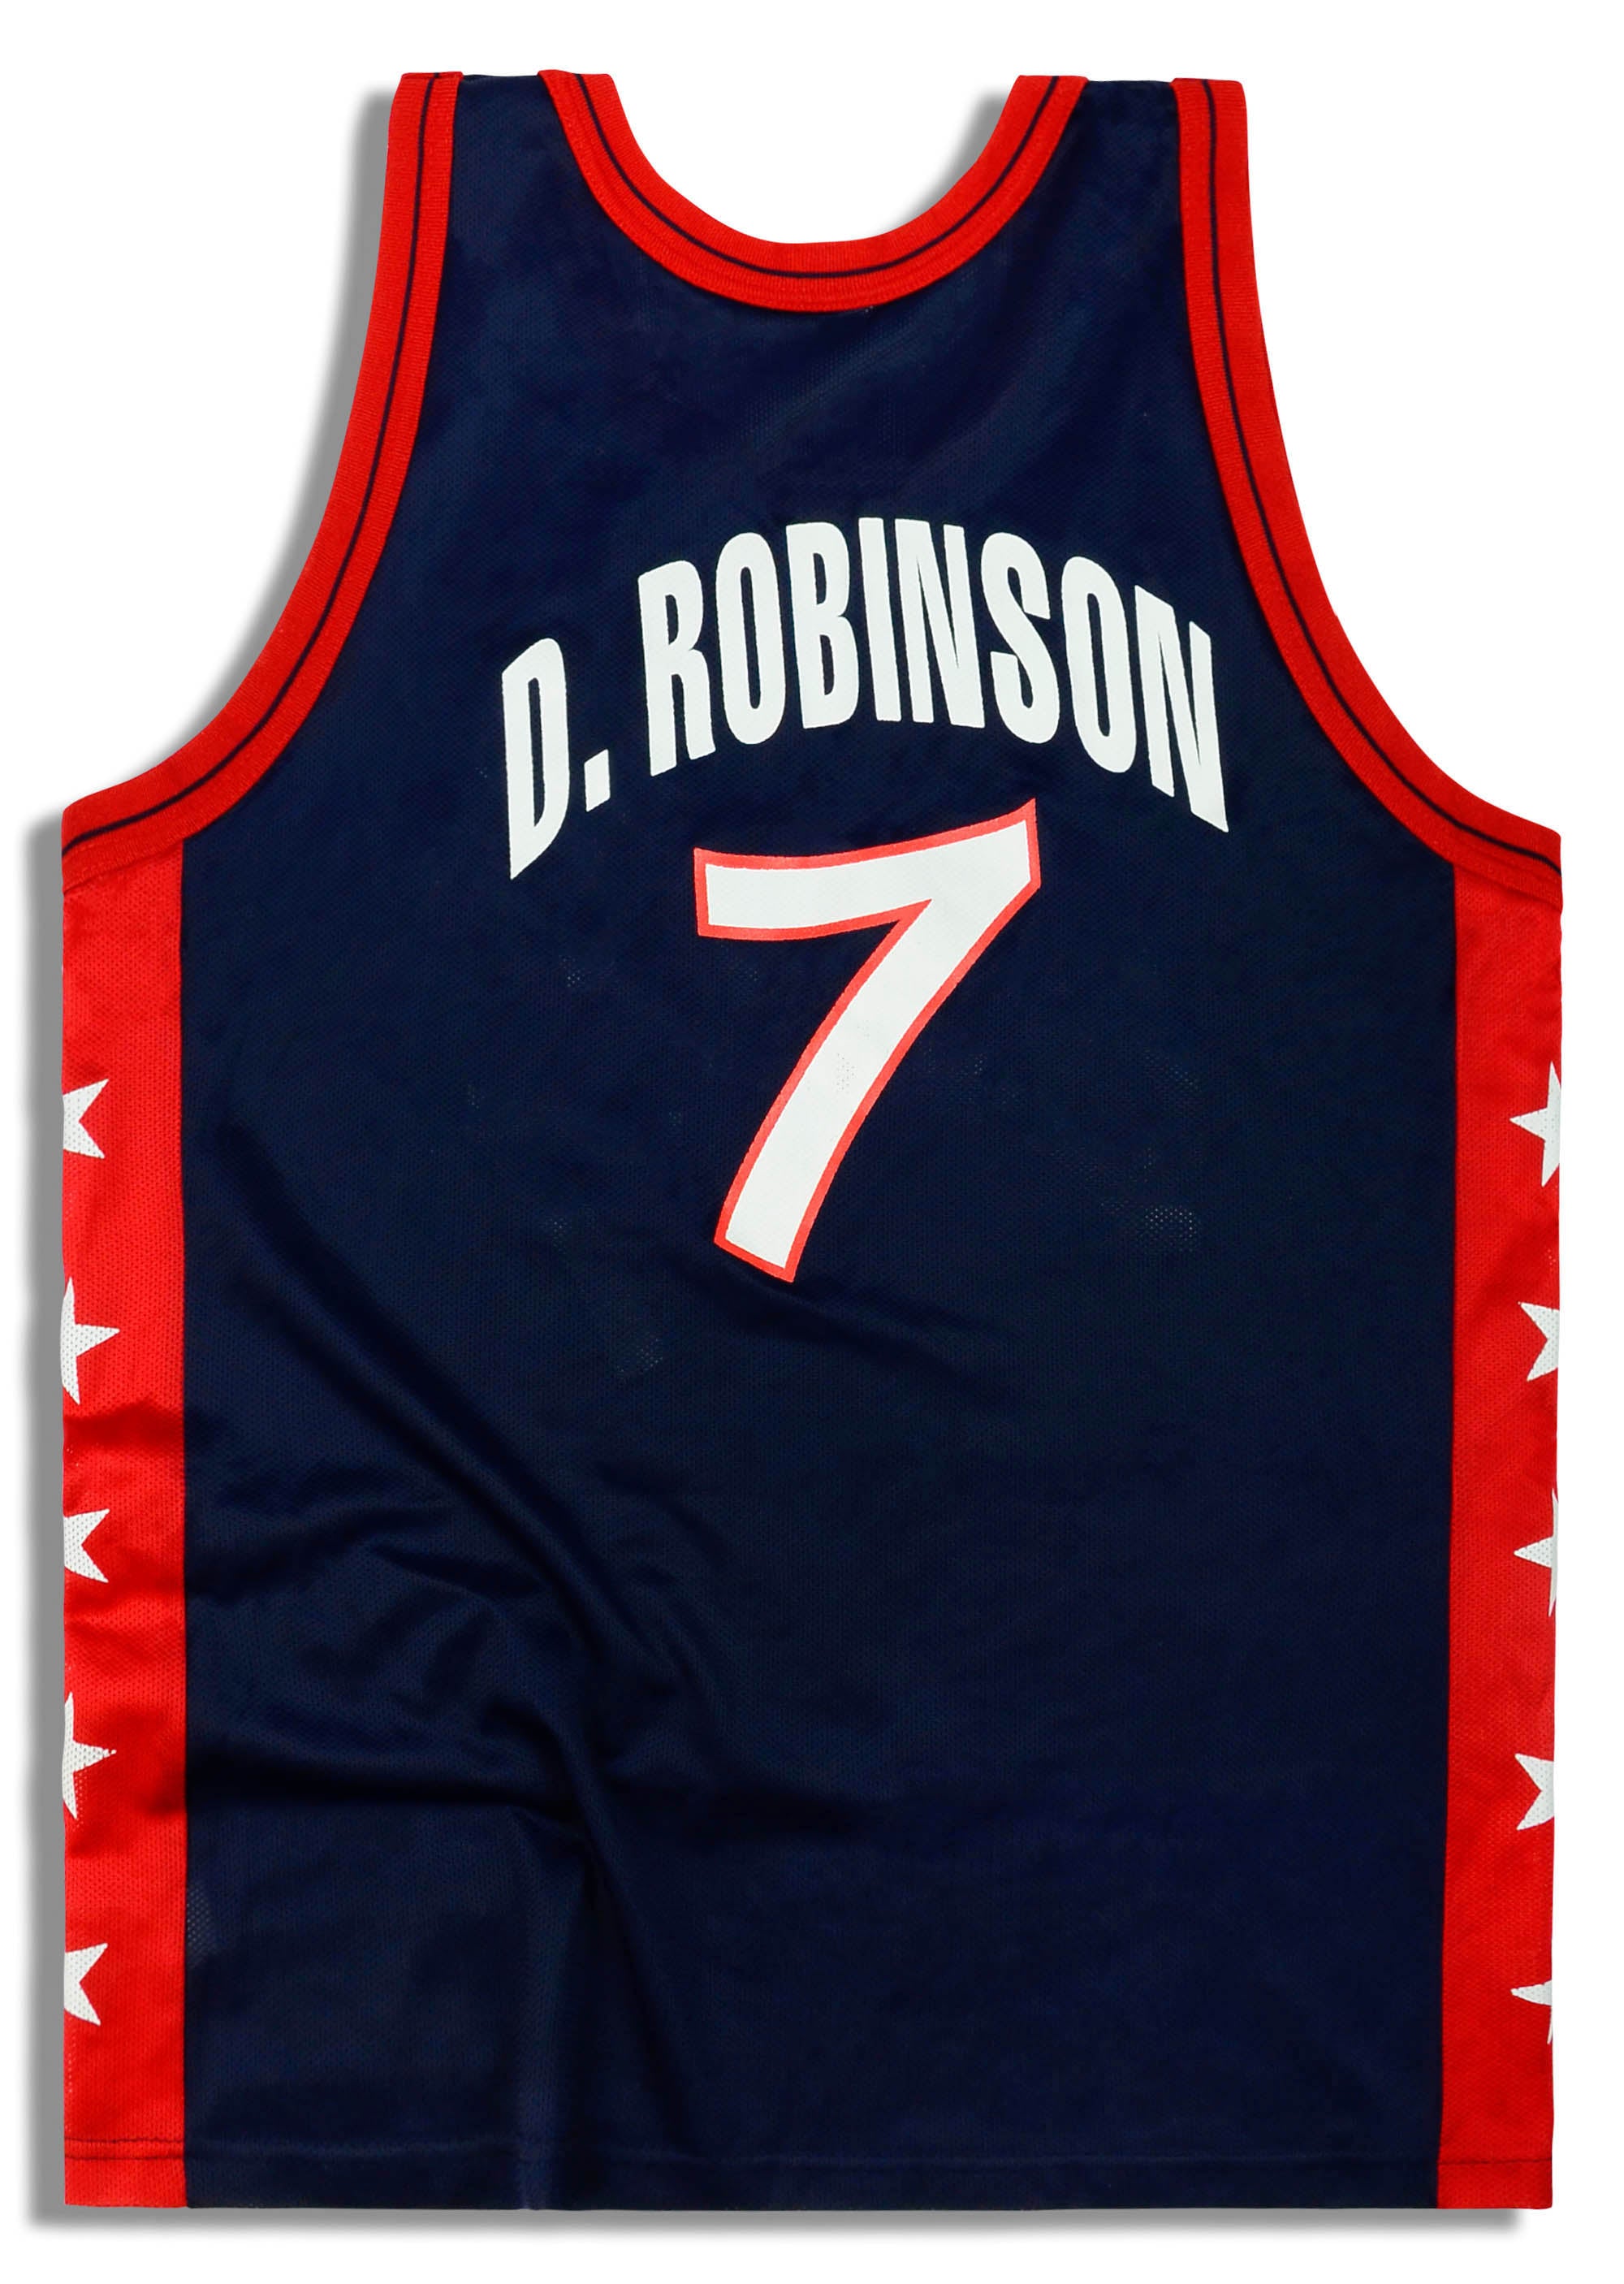 1996-99 USA D. ROBINSON #7 CHAMPION JERSEY (AWAY) XL